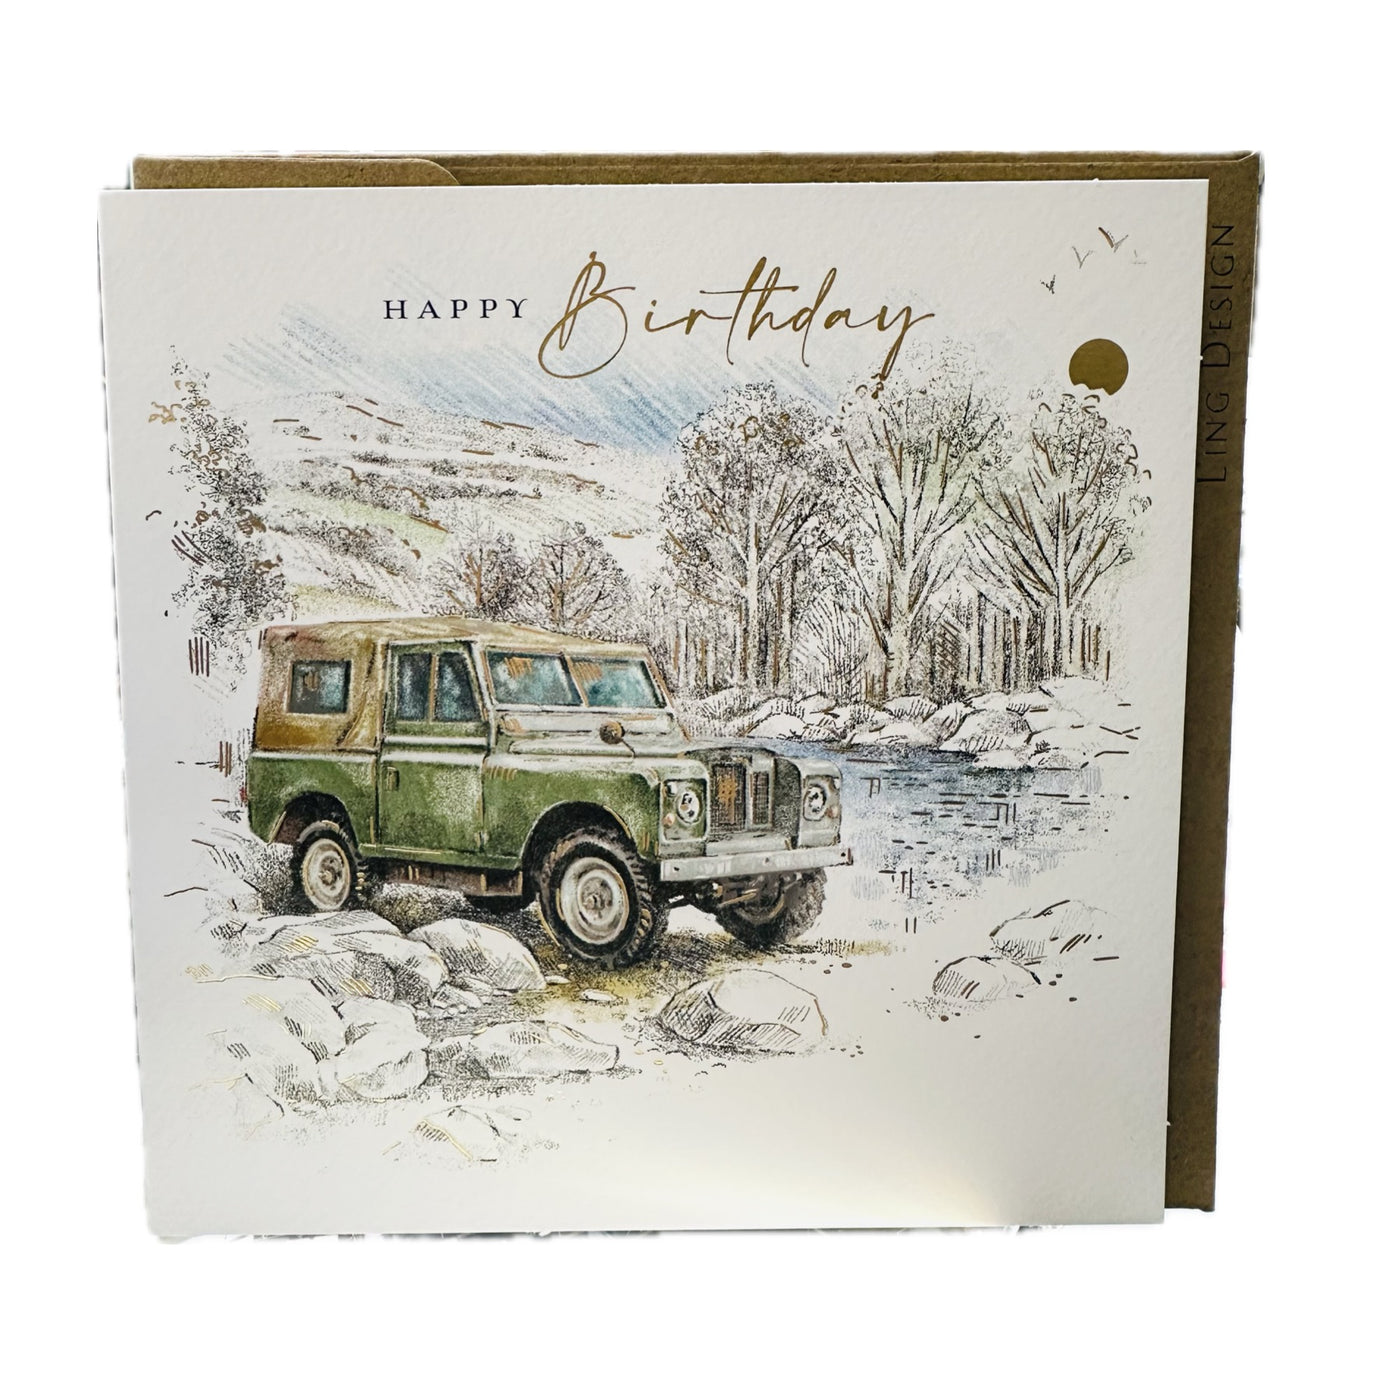 Happy Birthday Landrover Jeep Birthday Card - Ling Design